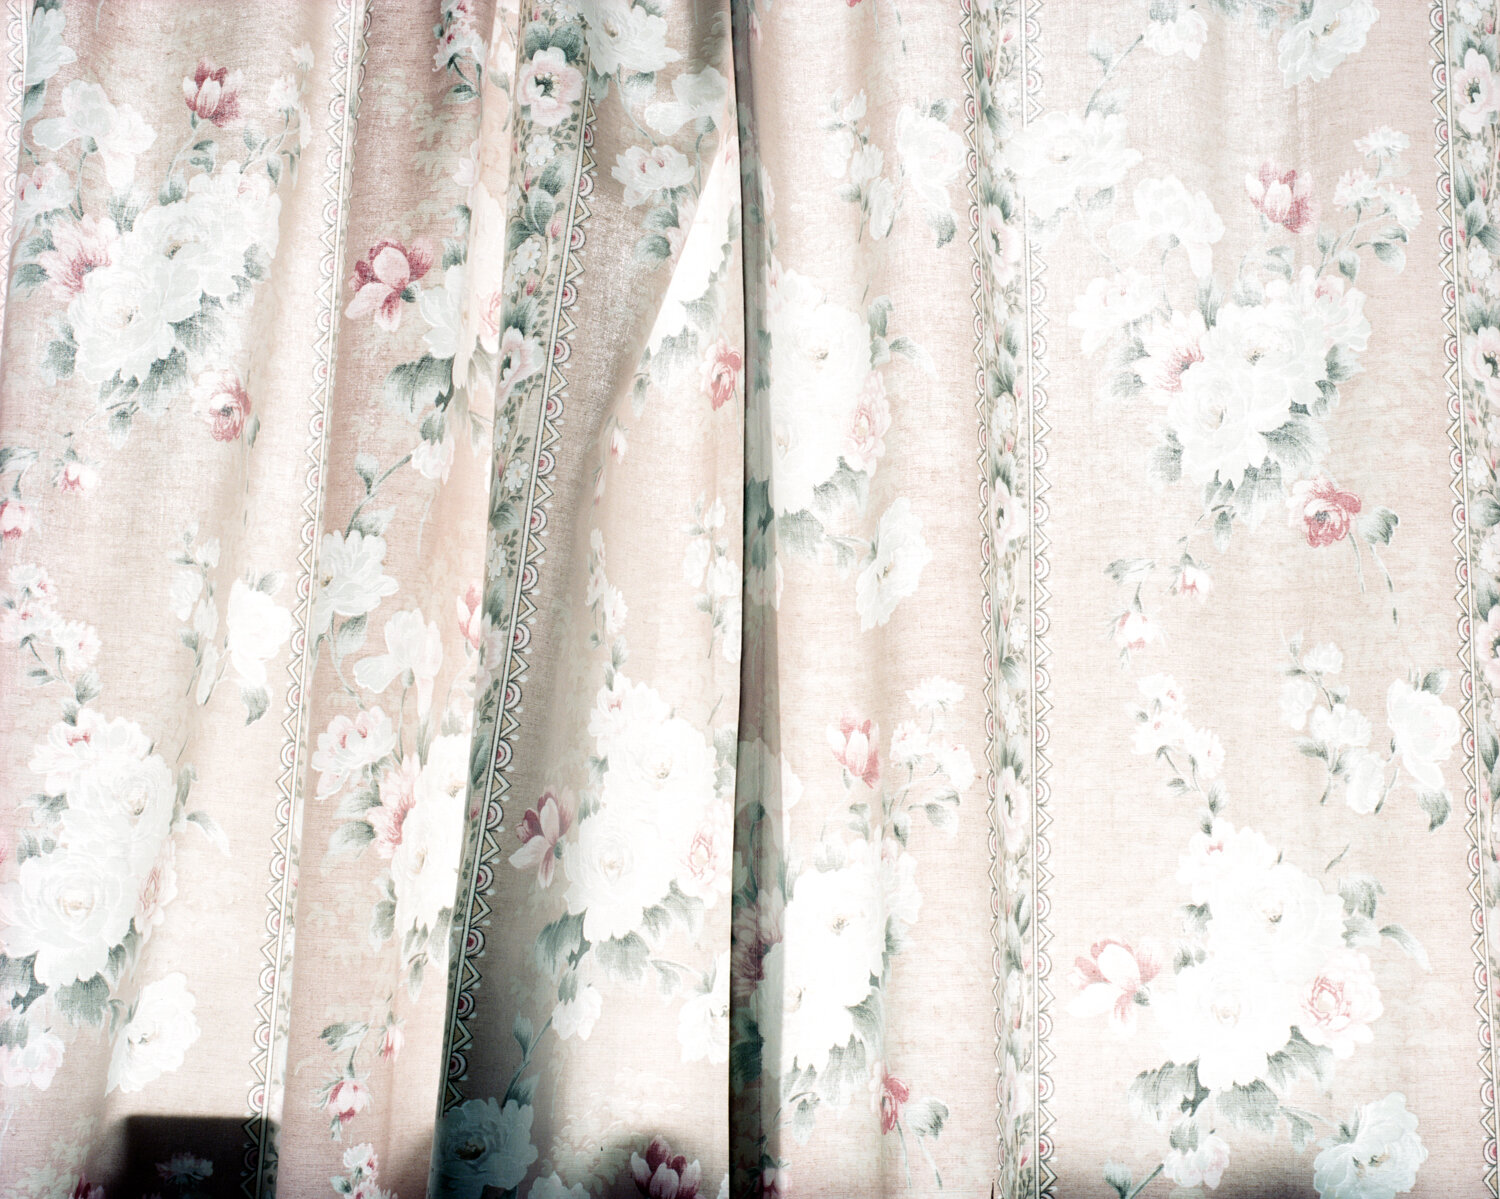 33) Curtains In The Bedroom - Sunderland.jpg